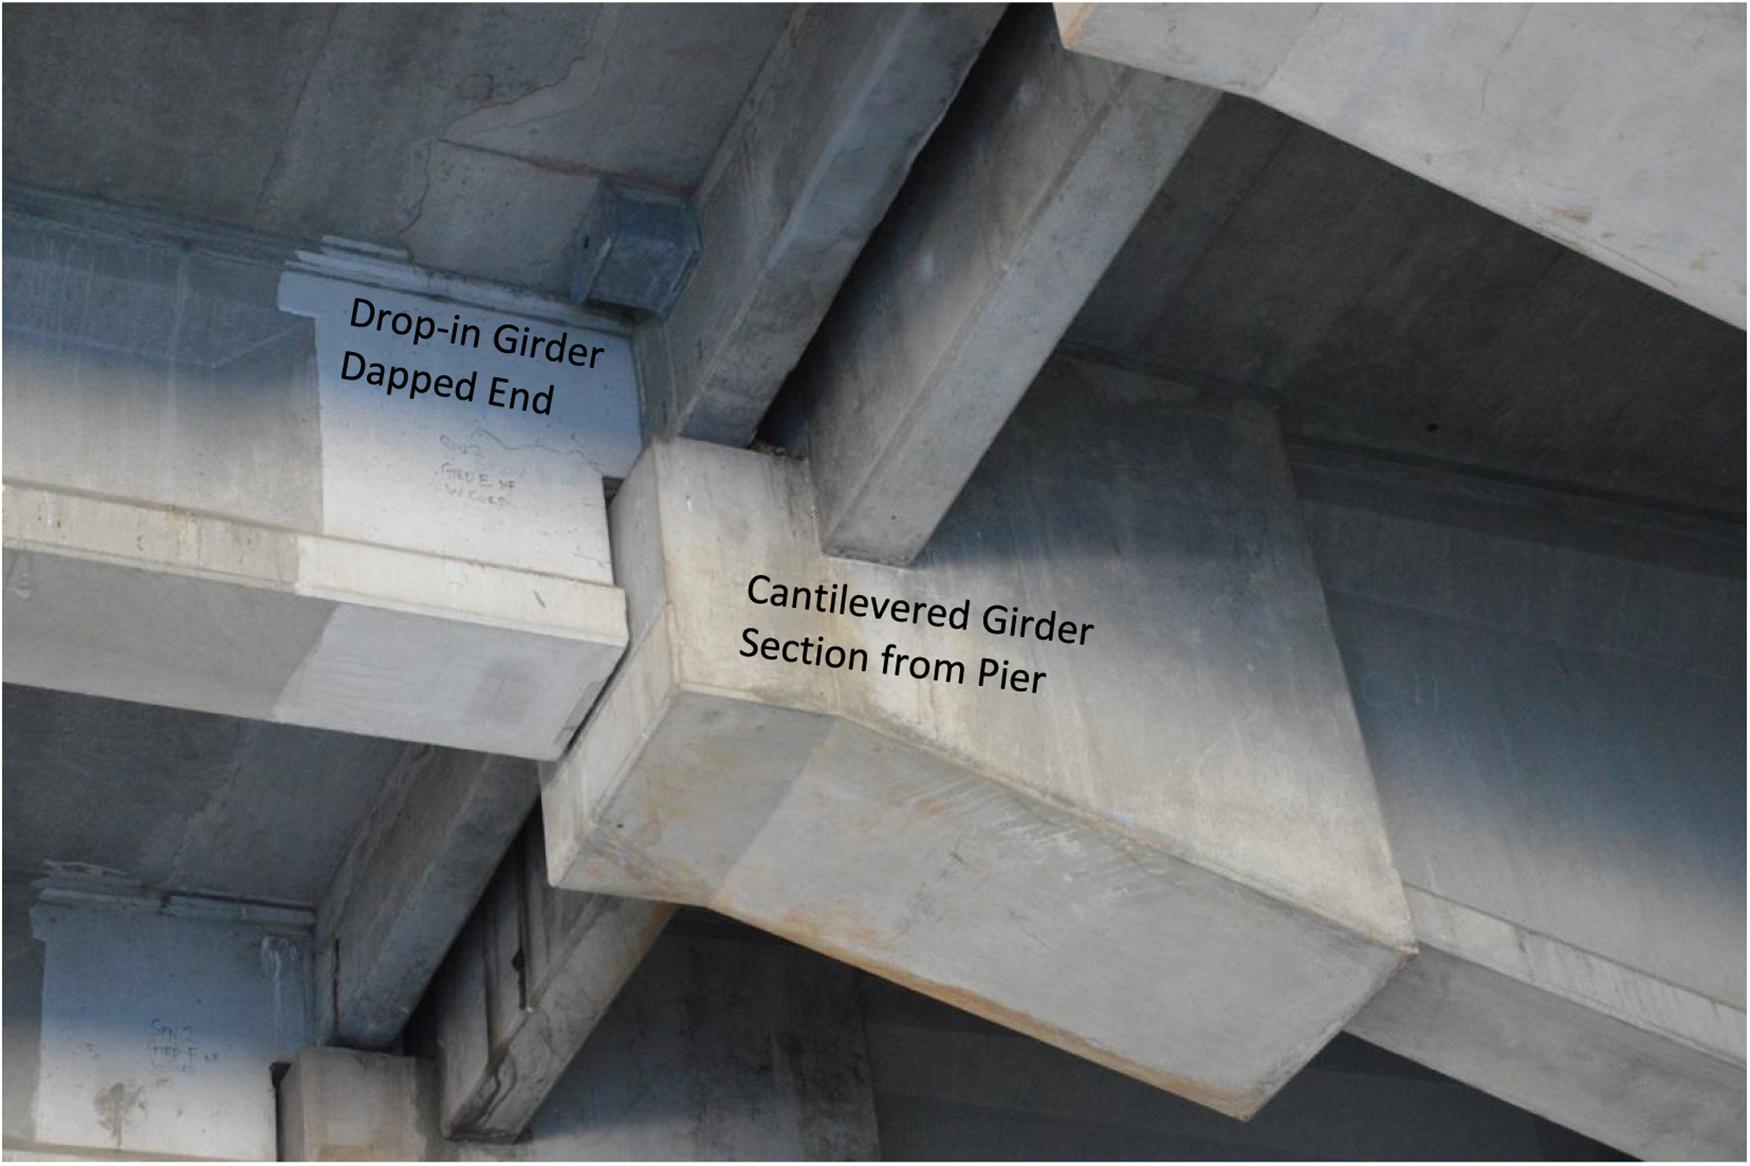 Bridge Load Rating of Steel Composite Bridge as per AASHTO LRFR